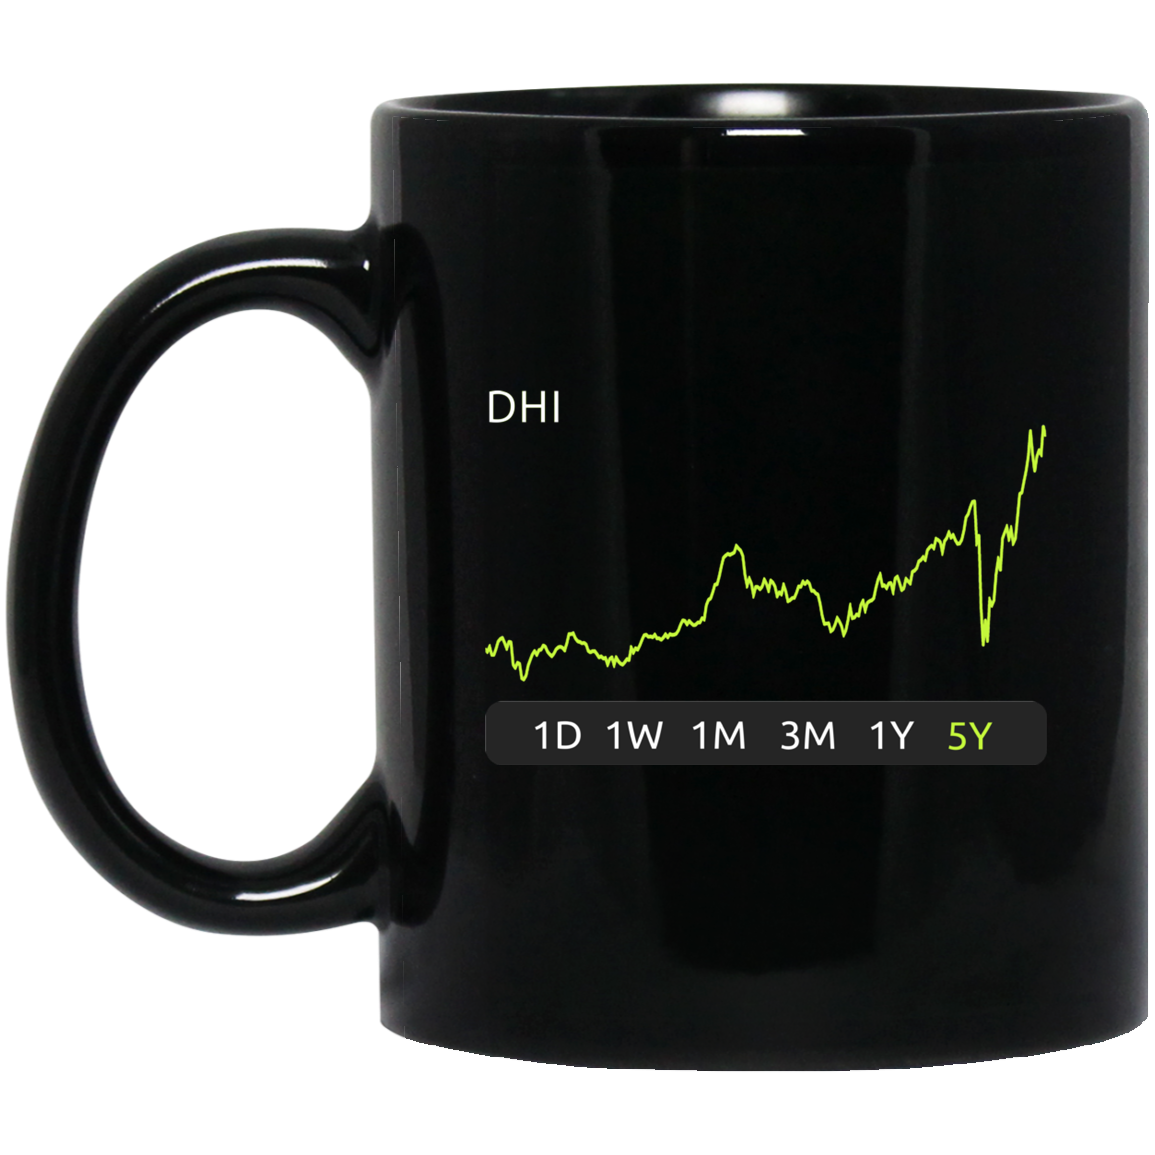 DHI Stock 5y Mug